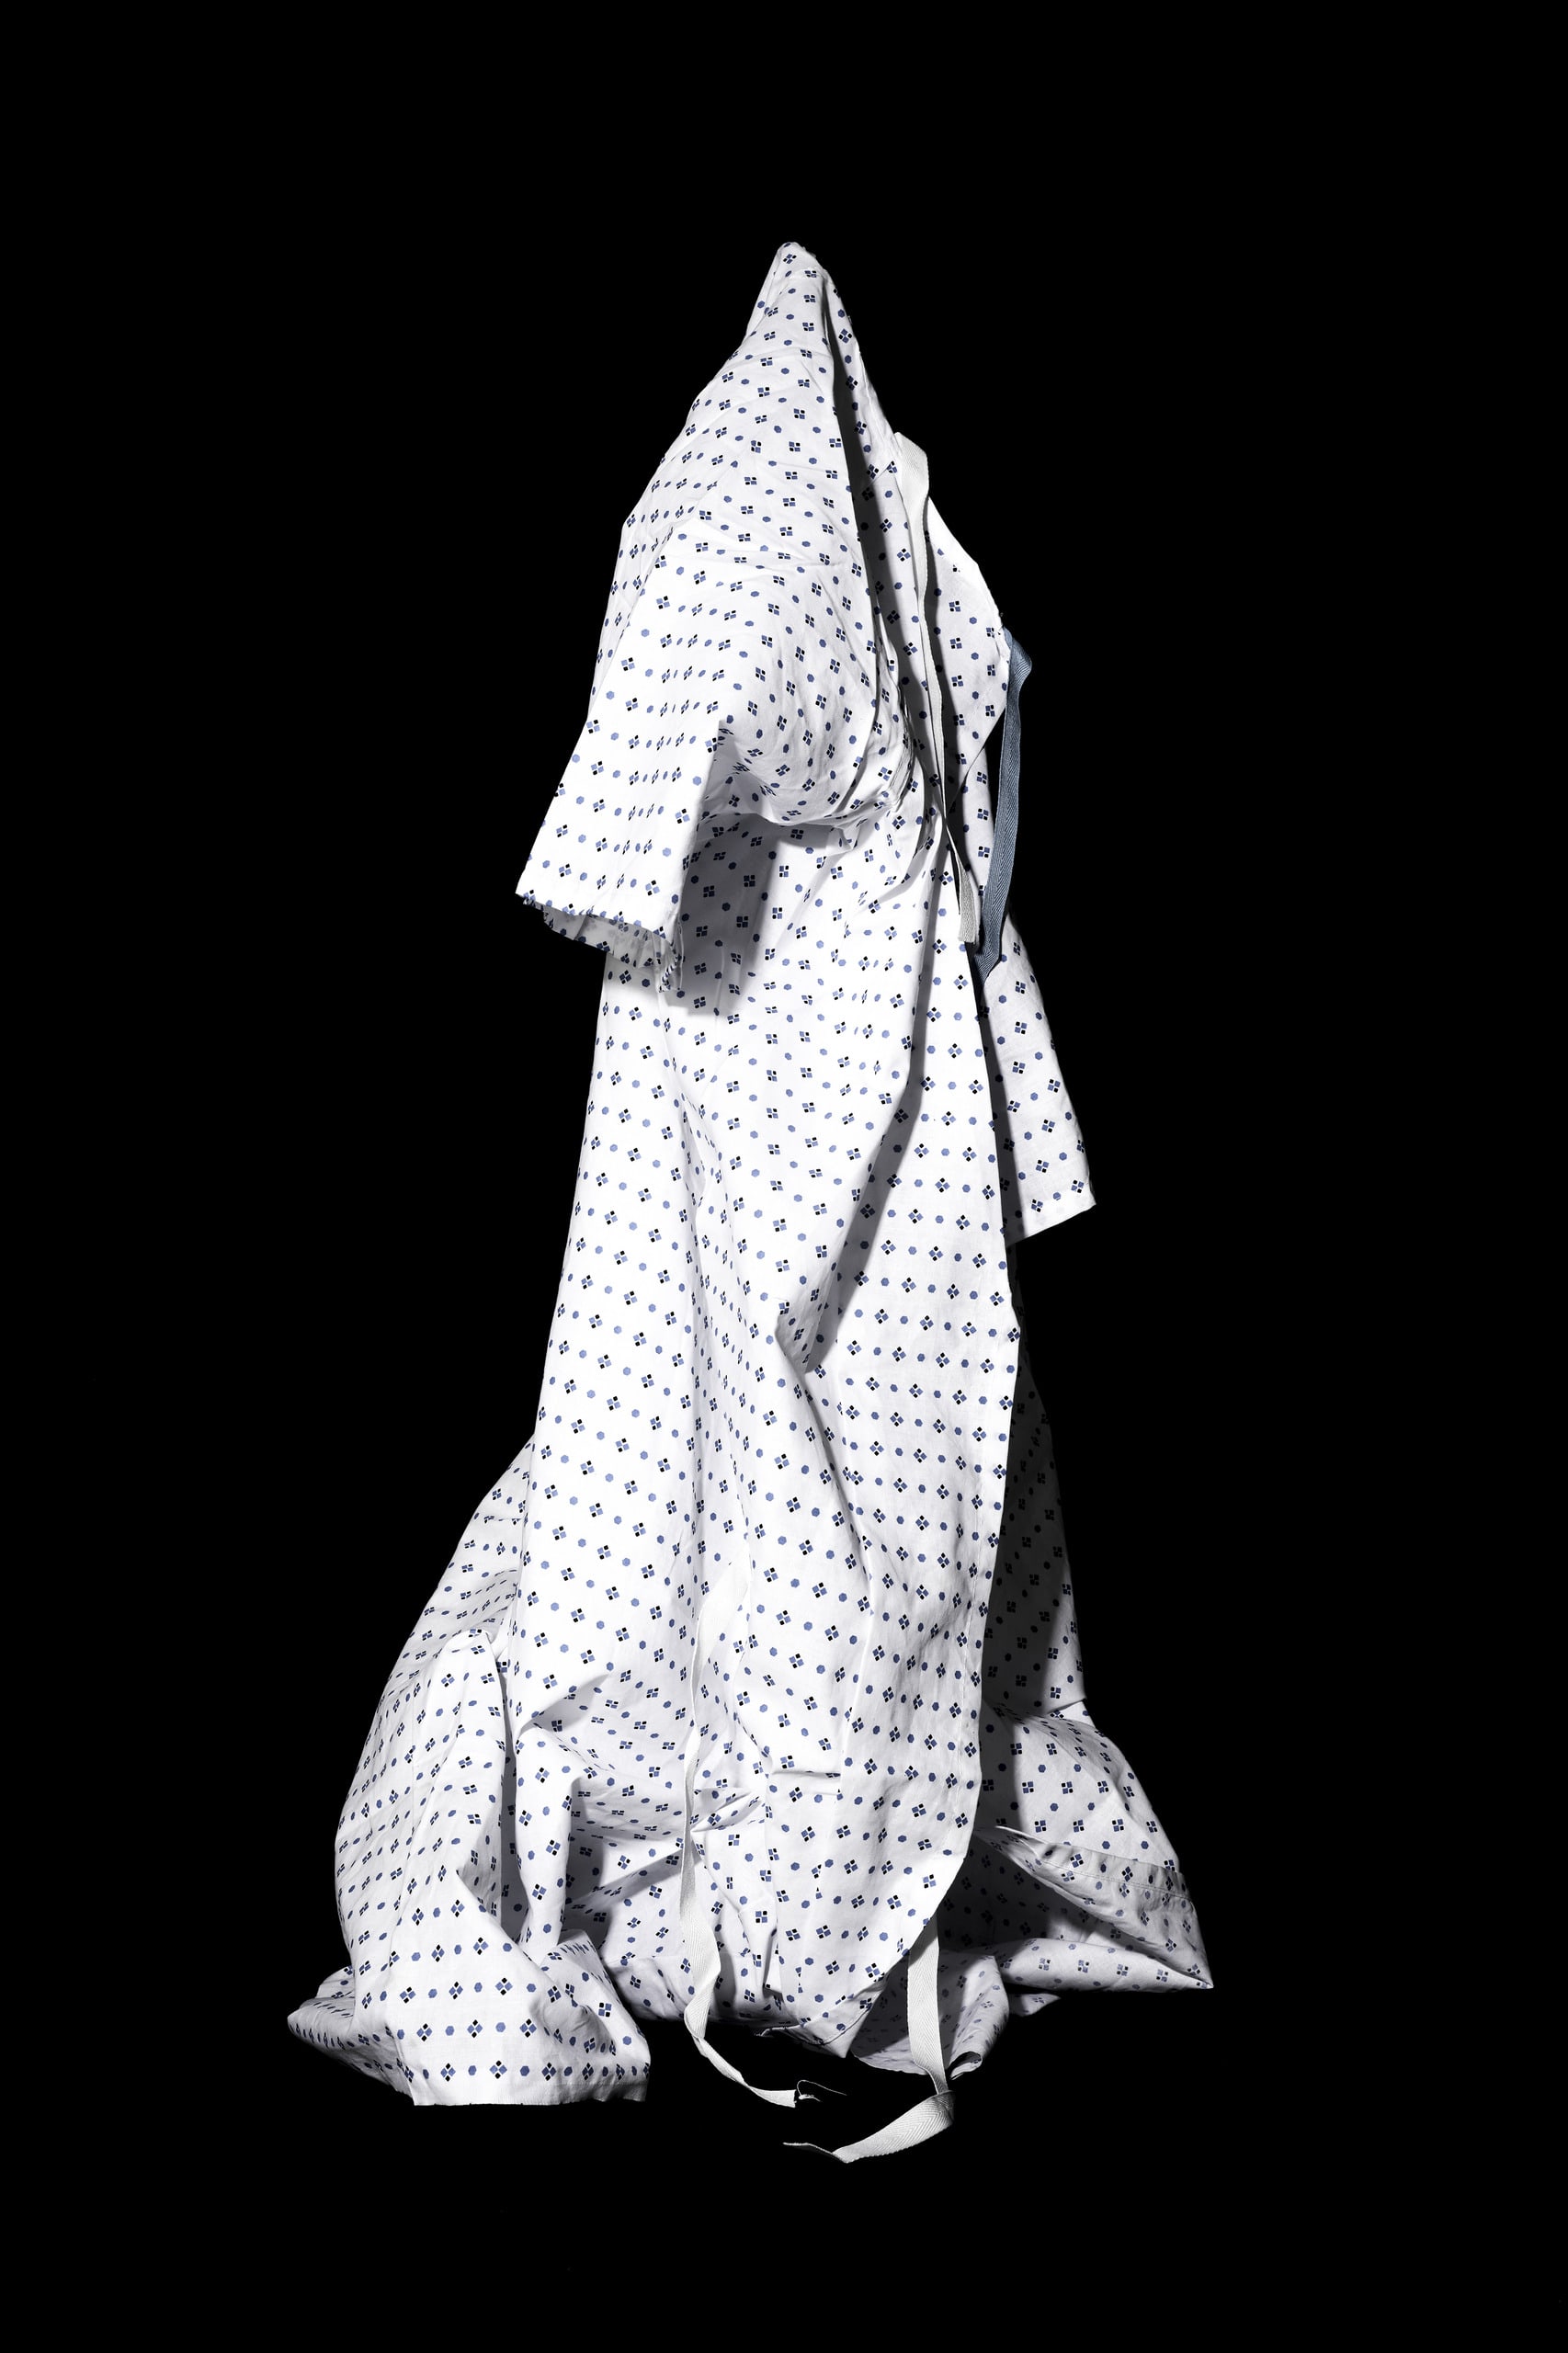 Digital image of medical gown